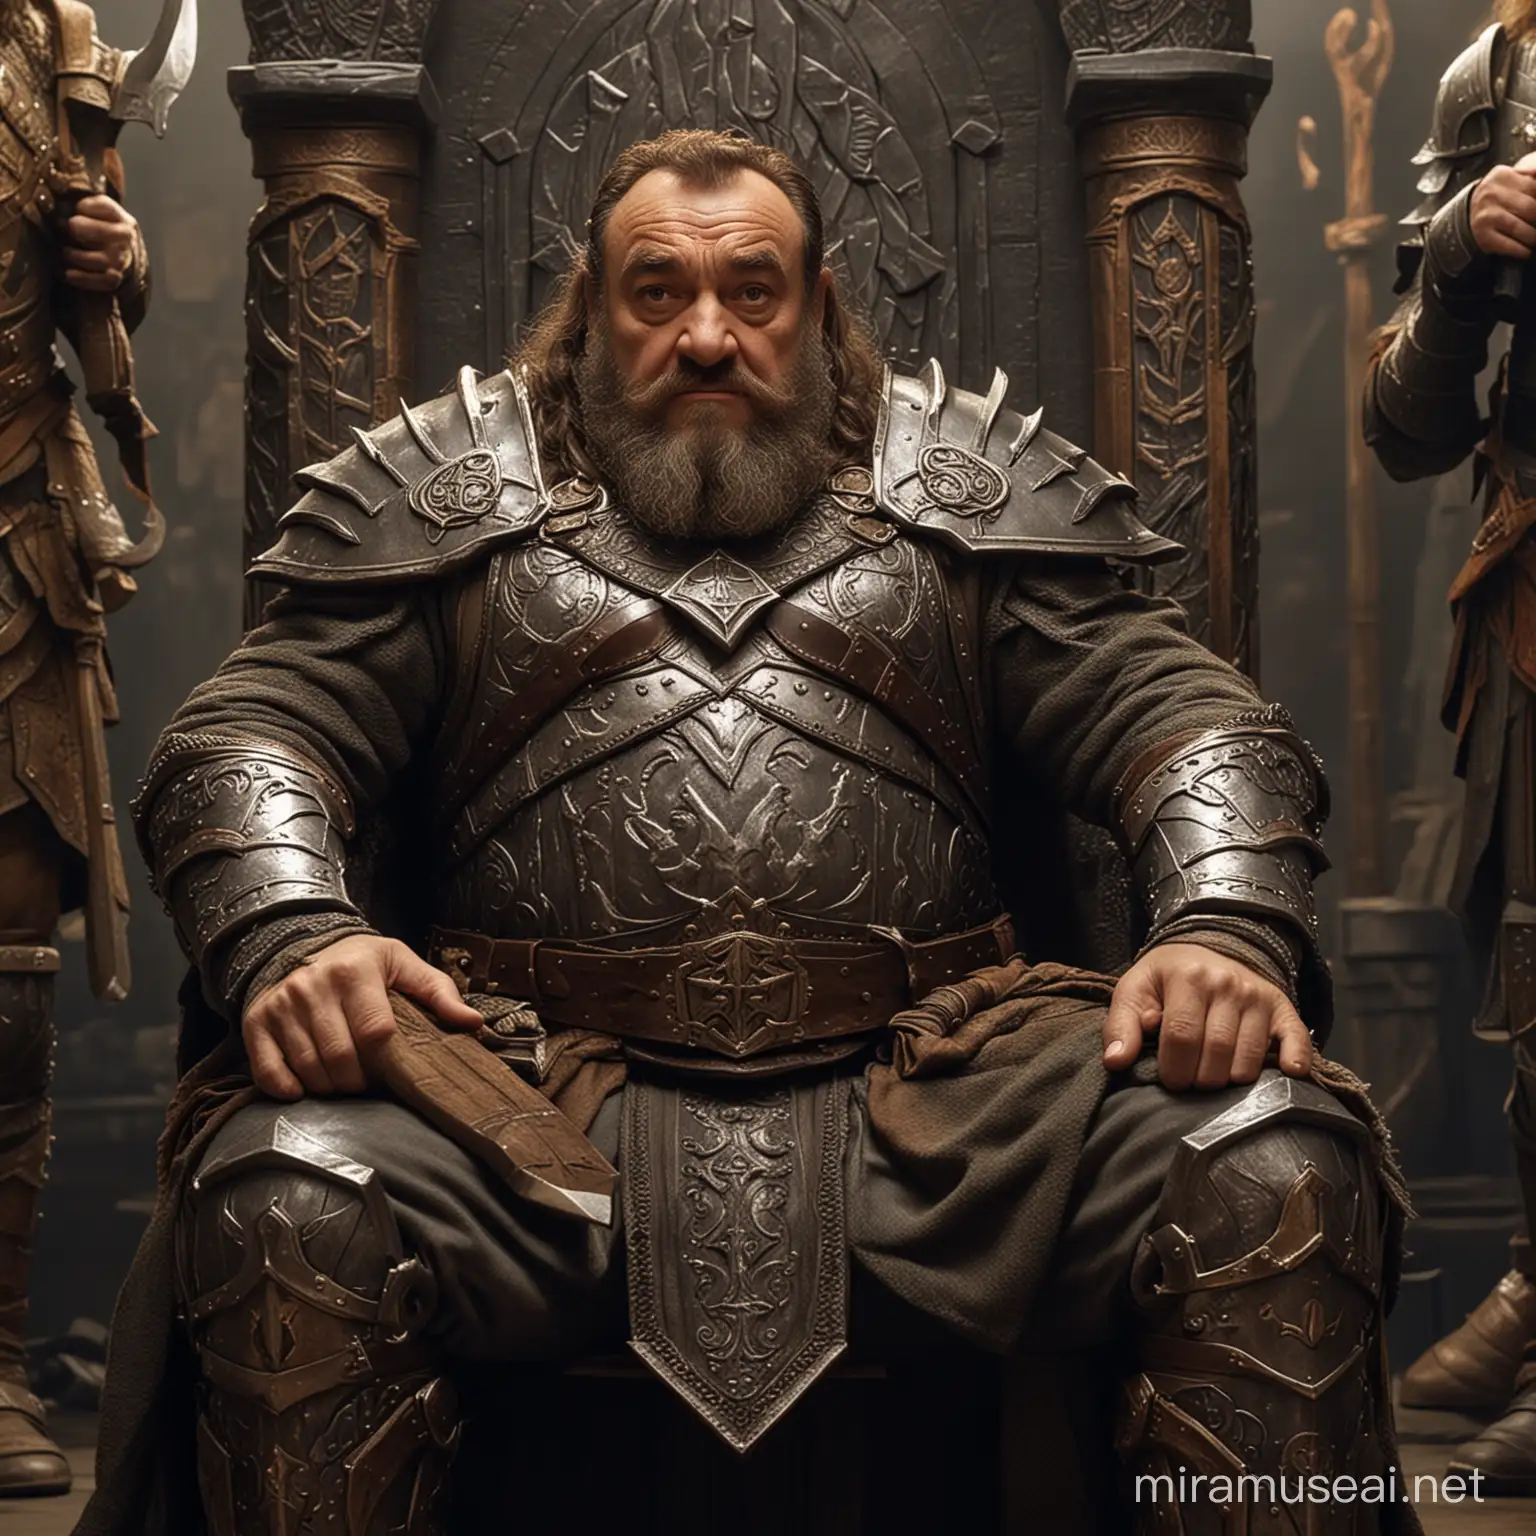 Muscular Dwarven King John RhysDavies Reigns in Armor Amidst Throne Room Majesty